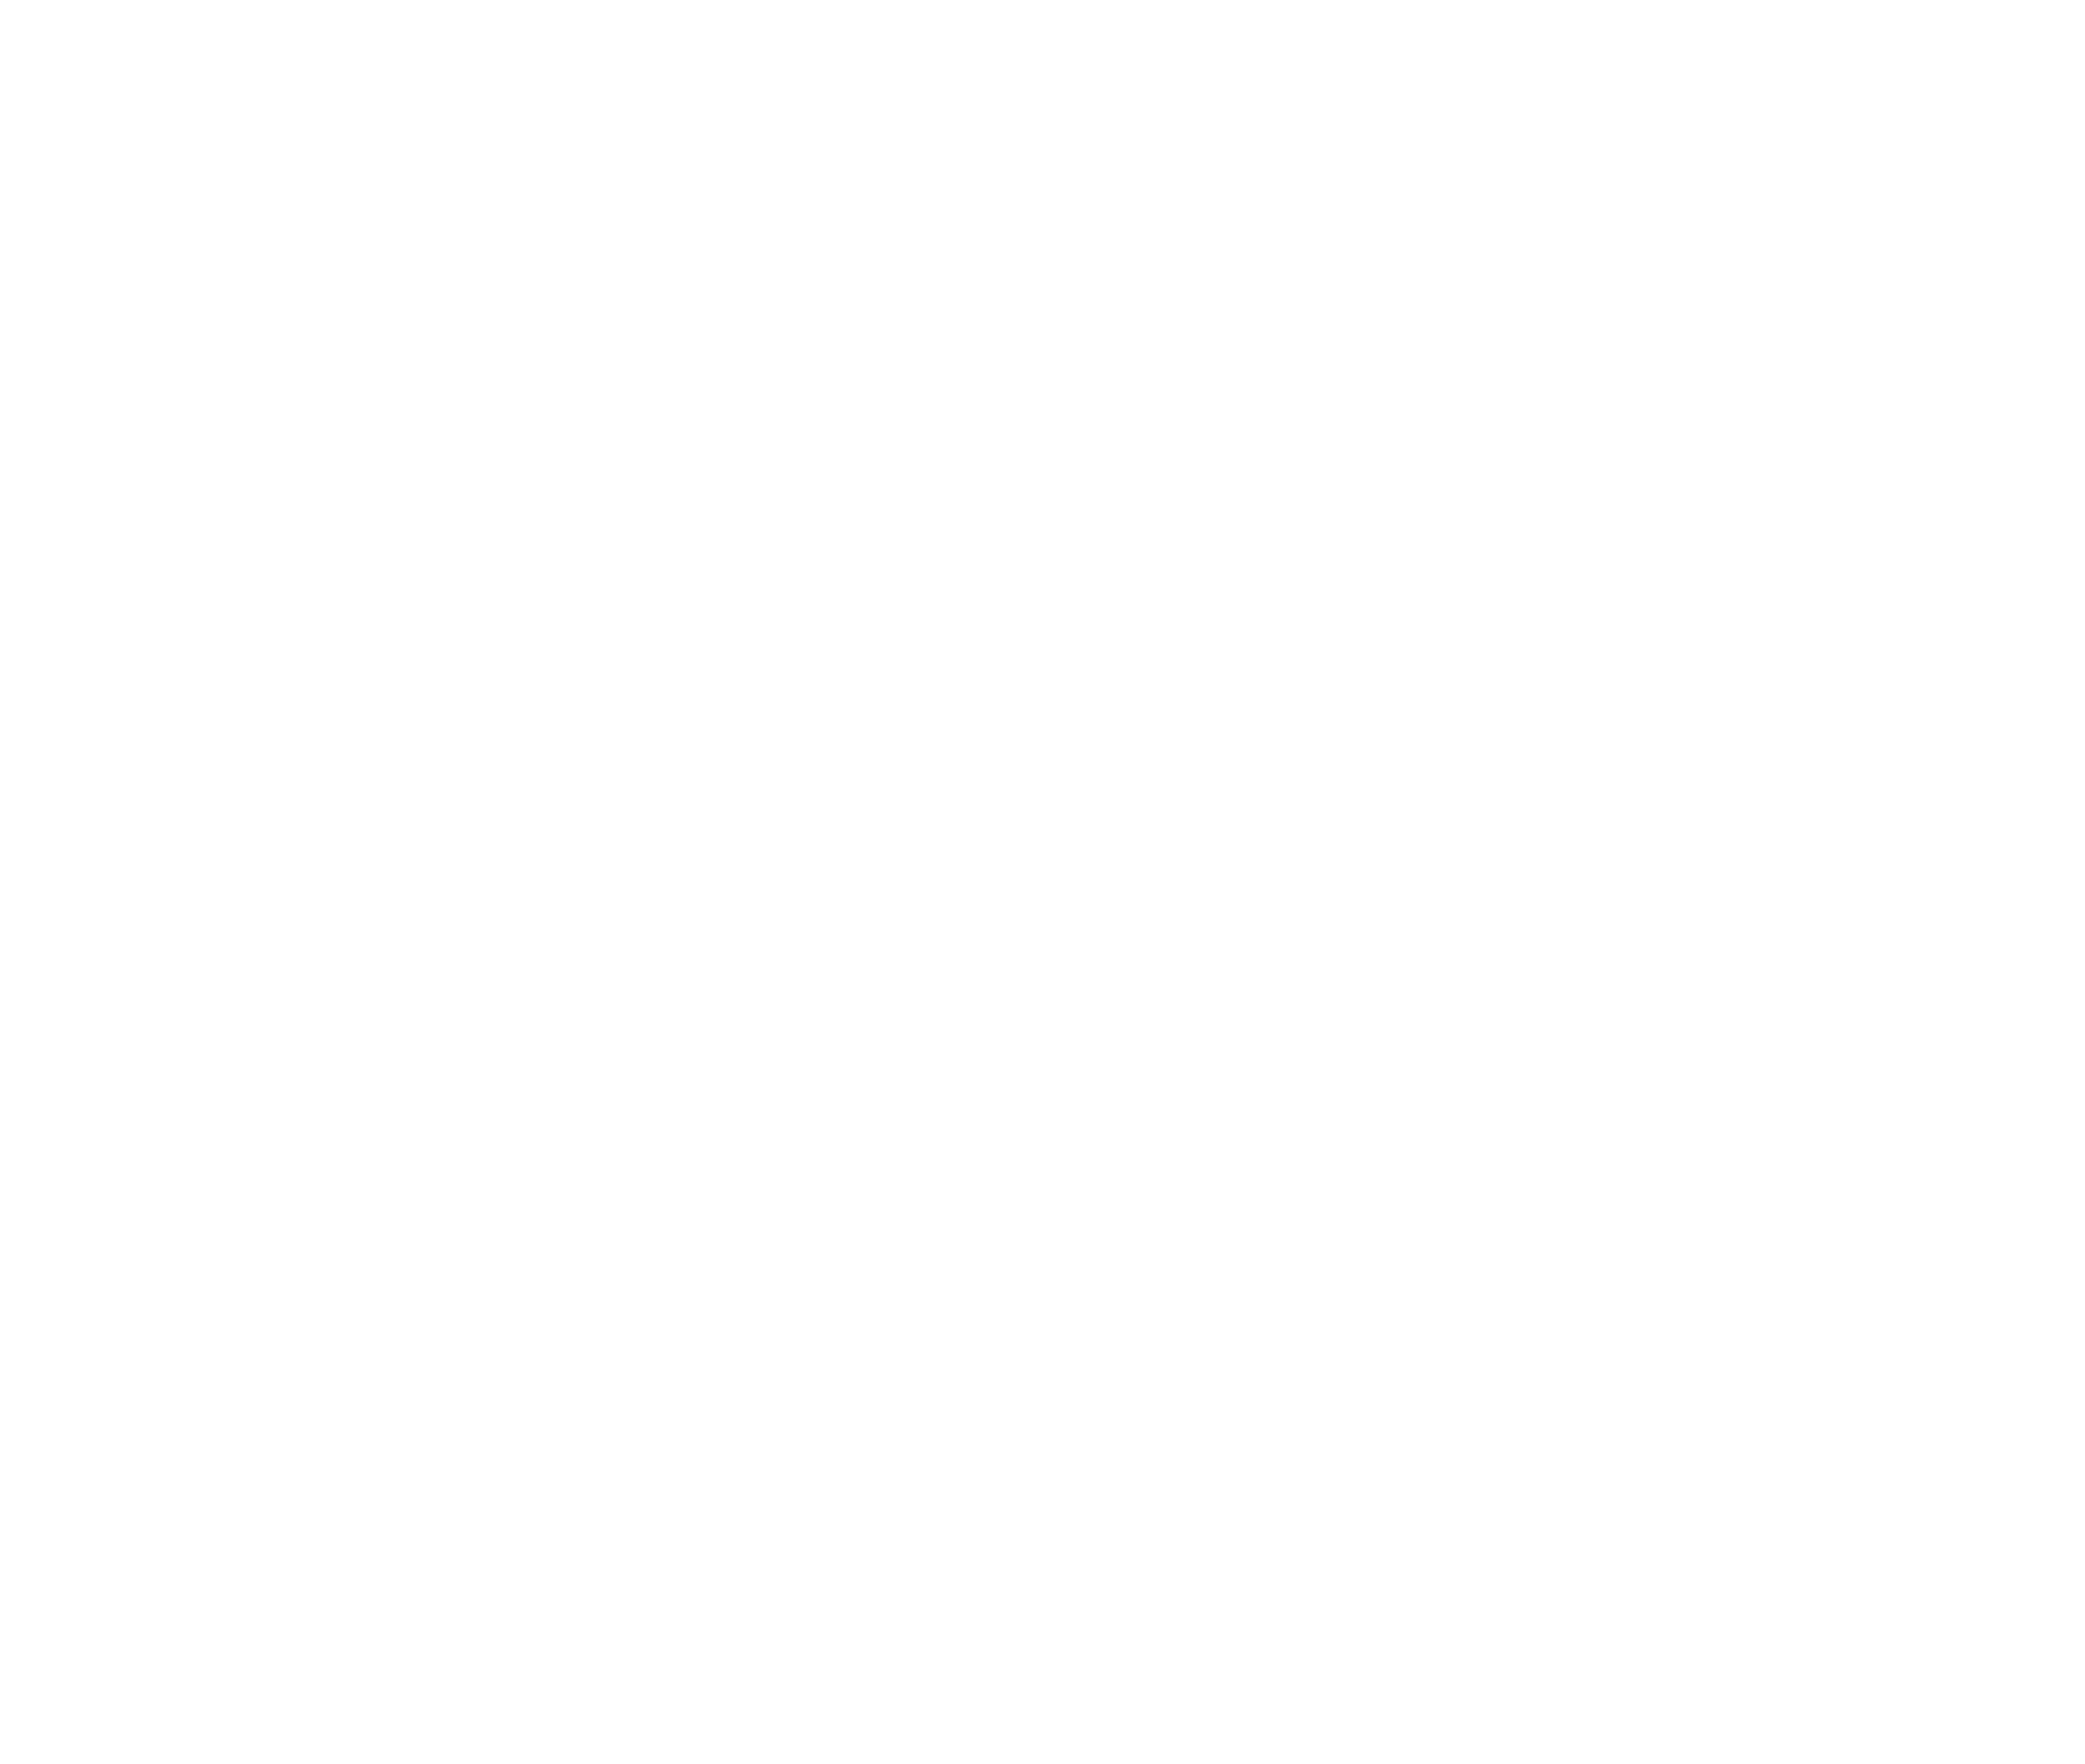 Global Shapers Community, Kano